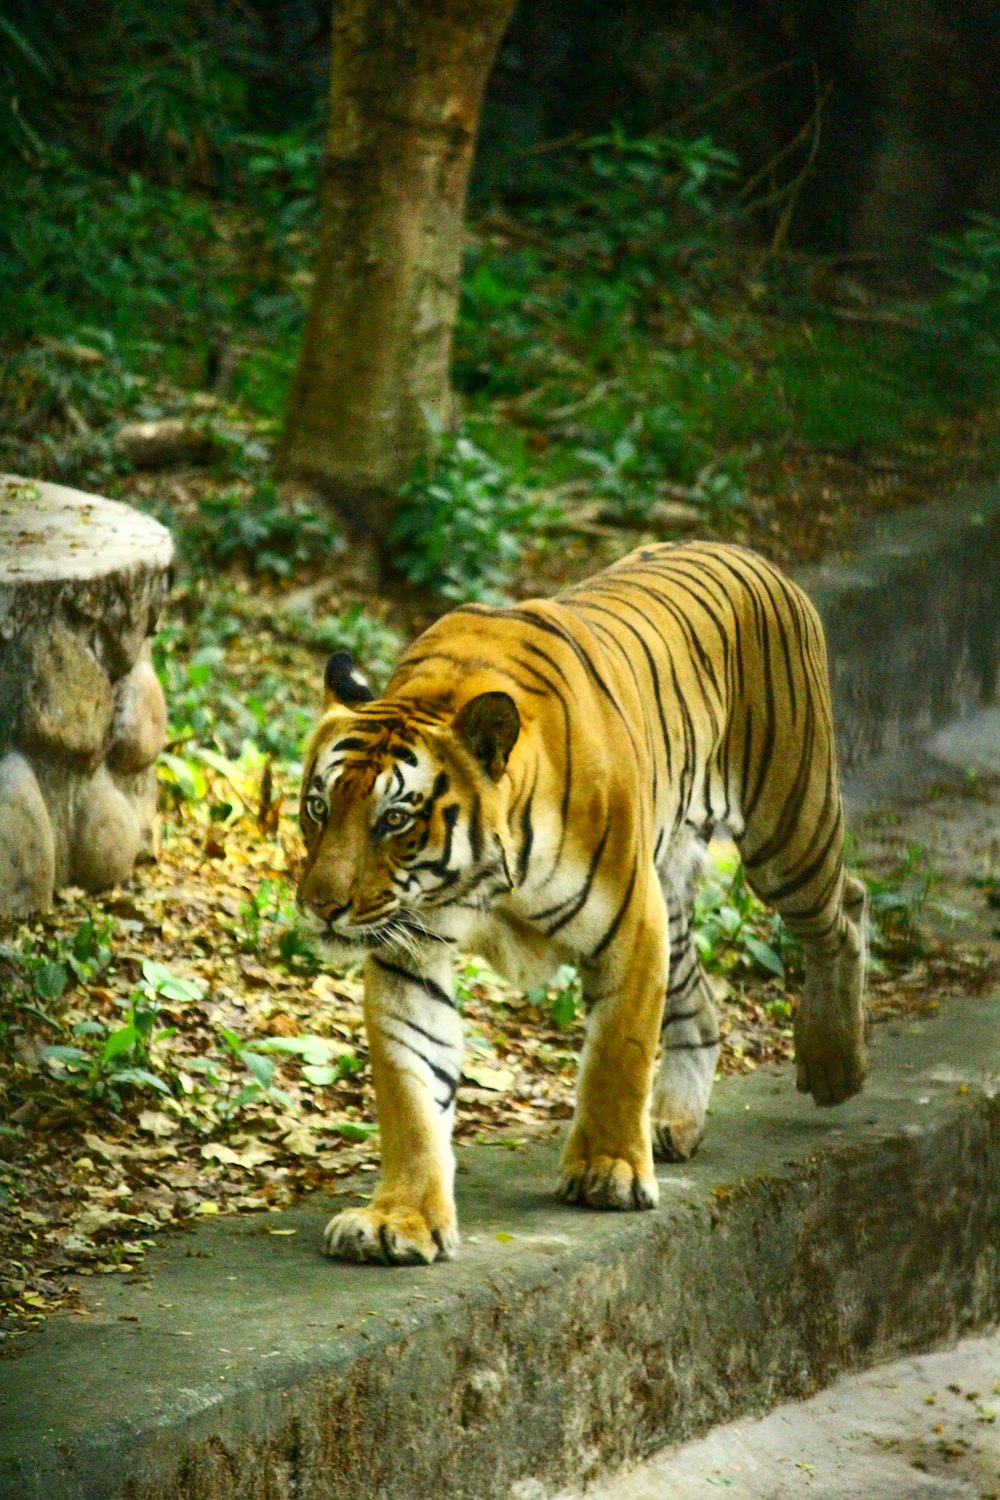 tigre que caminha na grama verde durante o dia